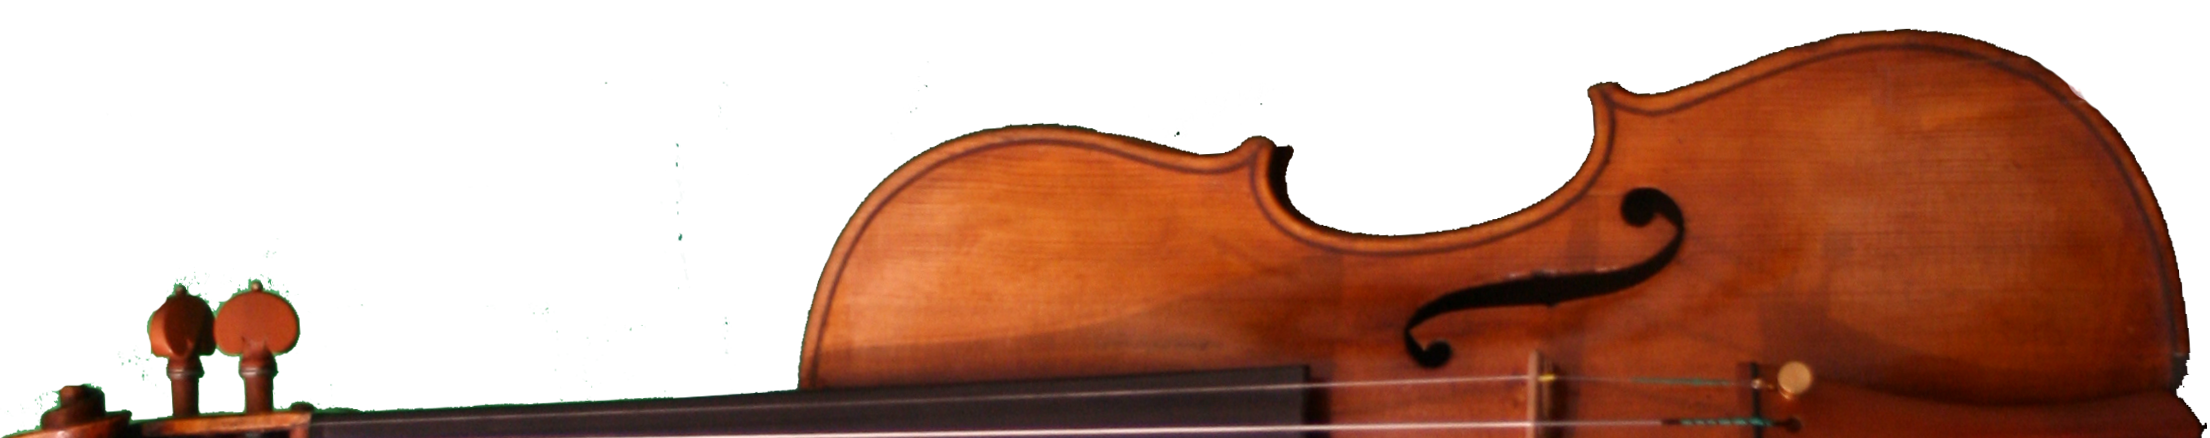 Violin HD PNG - 151184